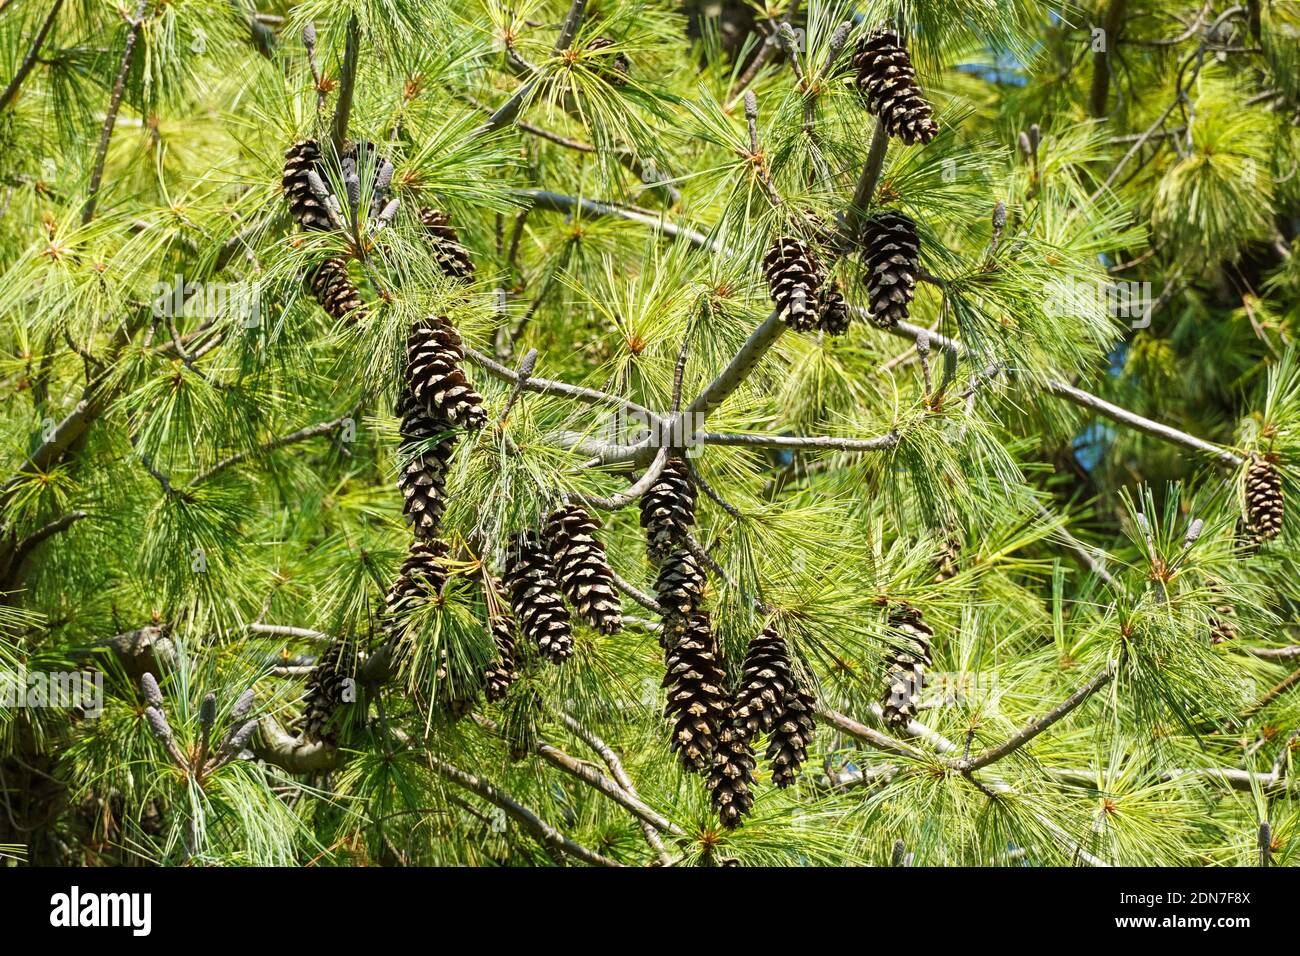 Himalayan pine, Pinus wallichiana, branch with cones Stock Photo